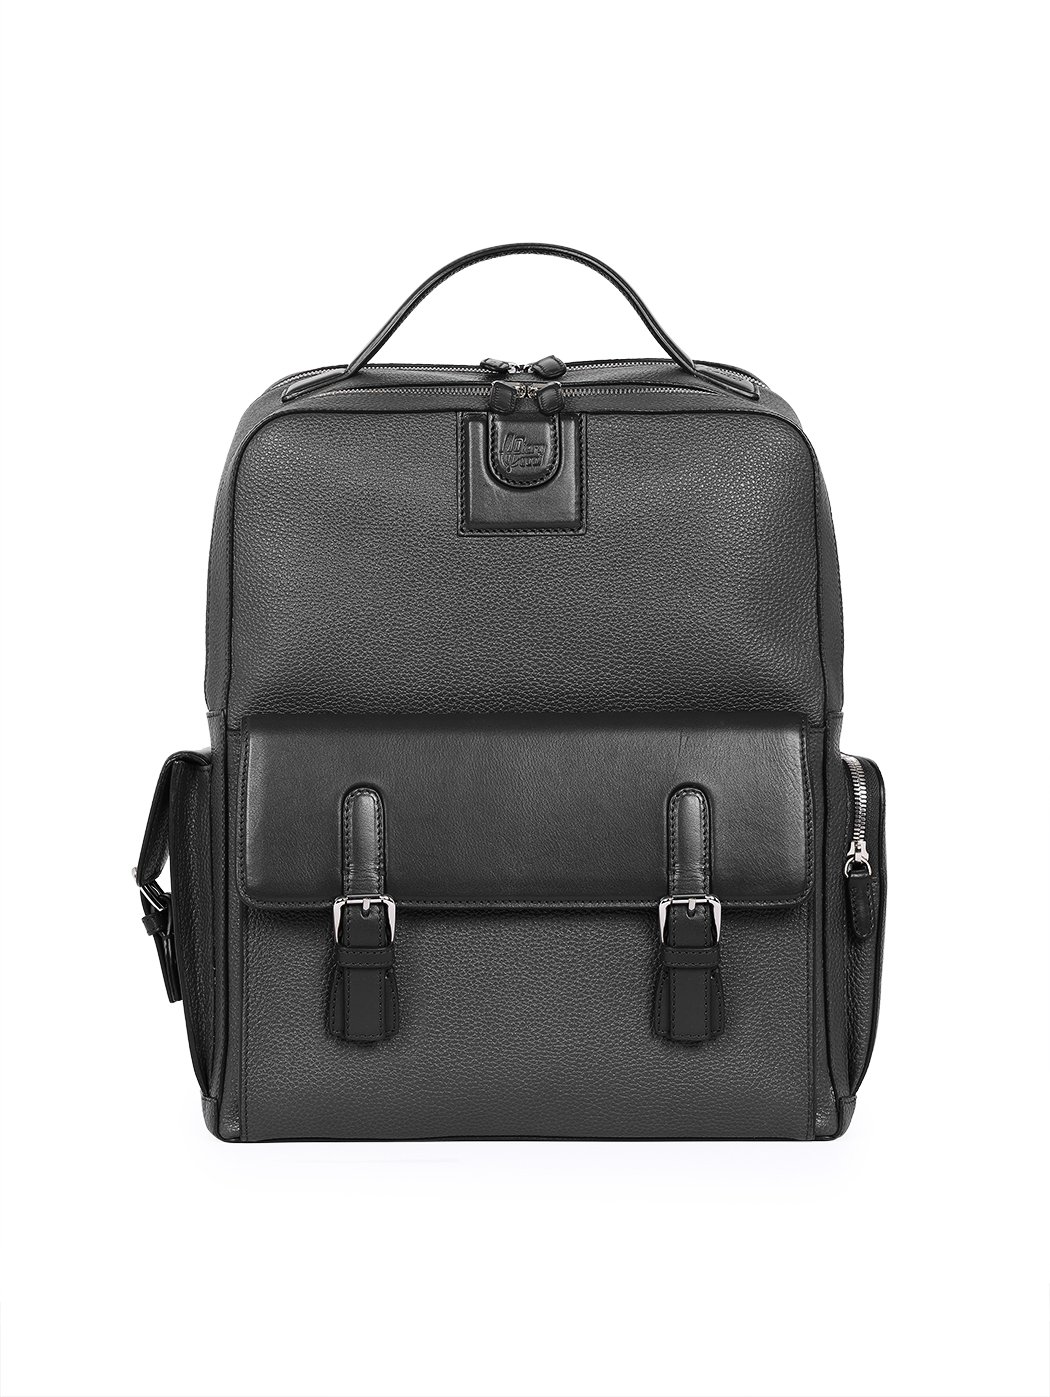 Professional Backpack Computer Leather Bag Black